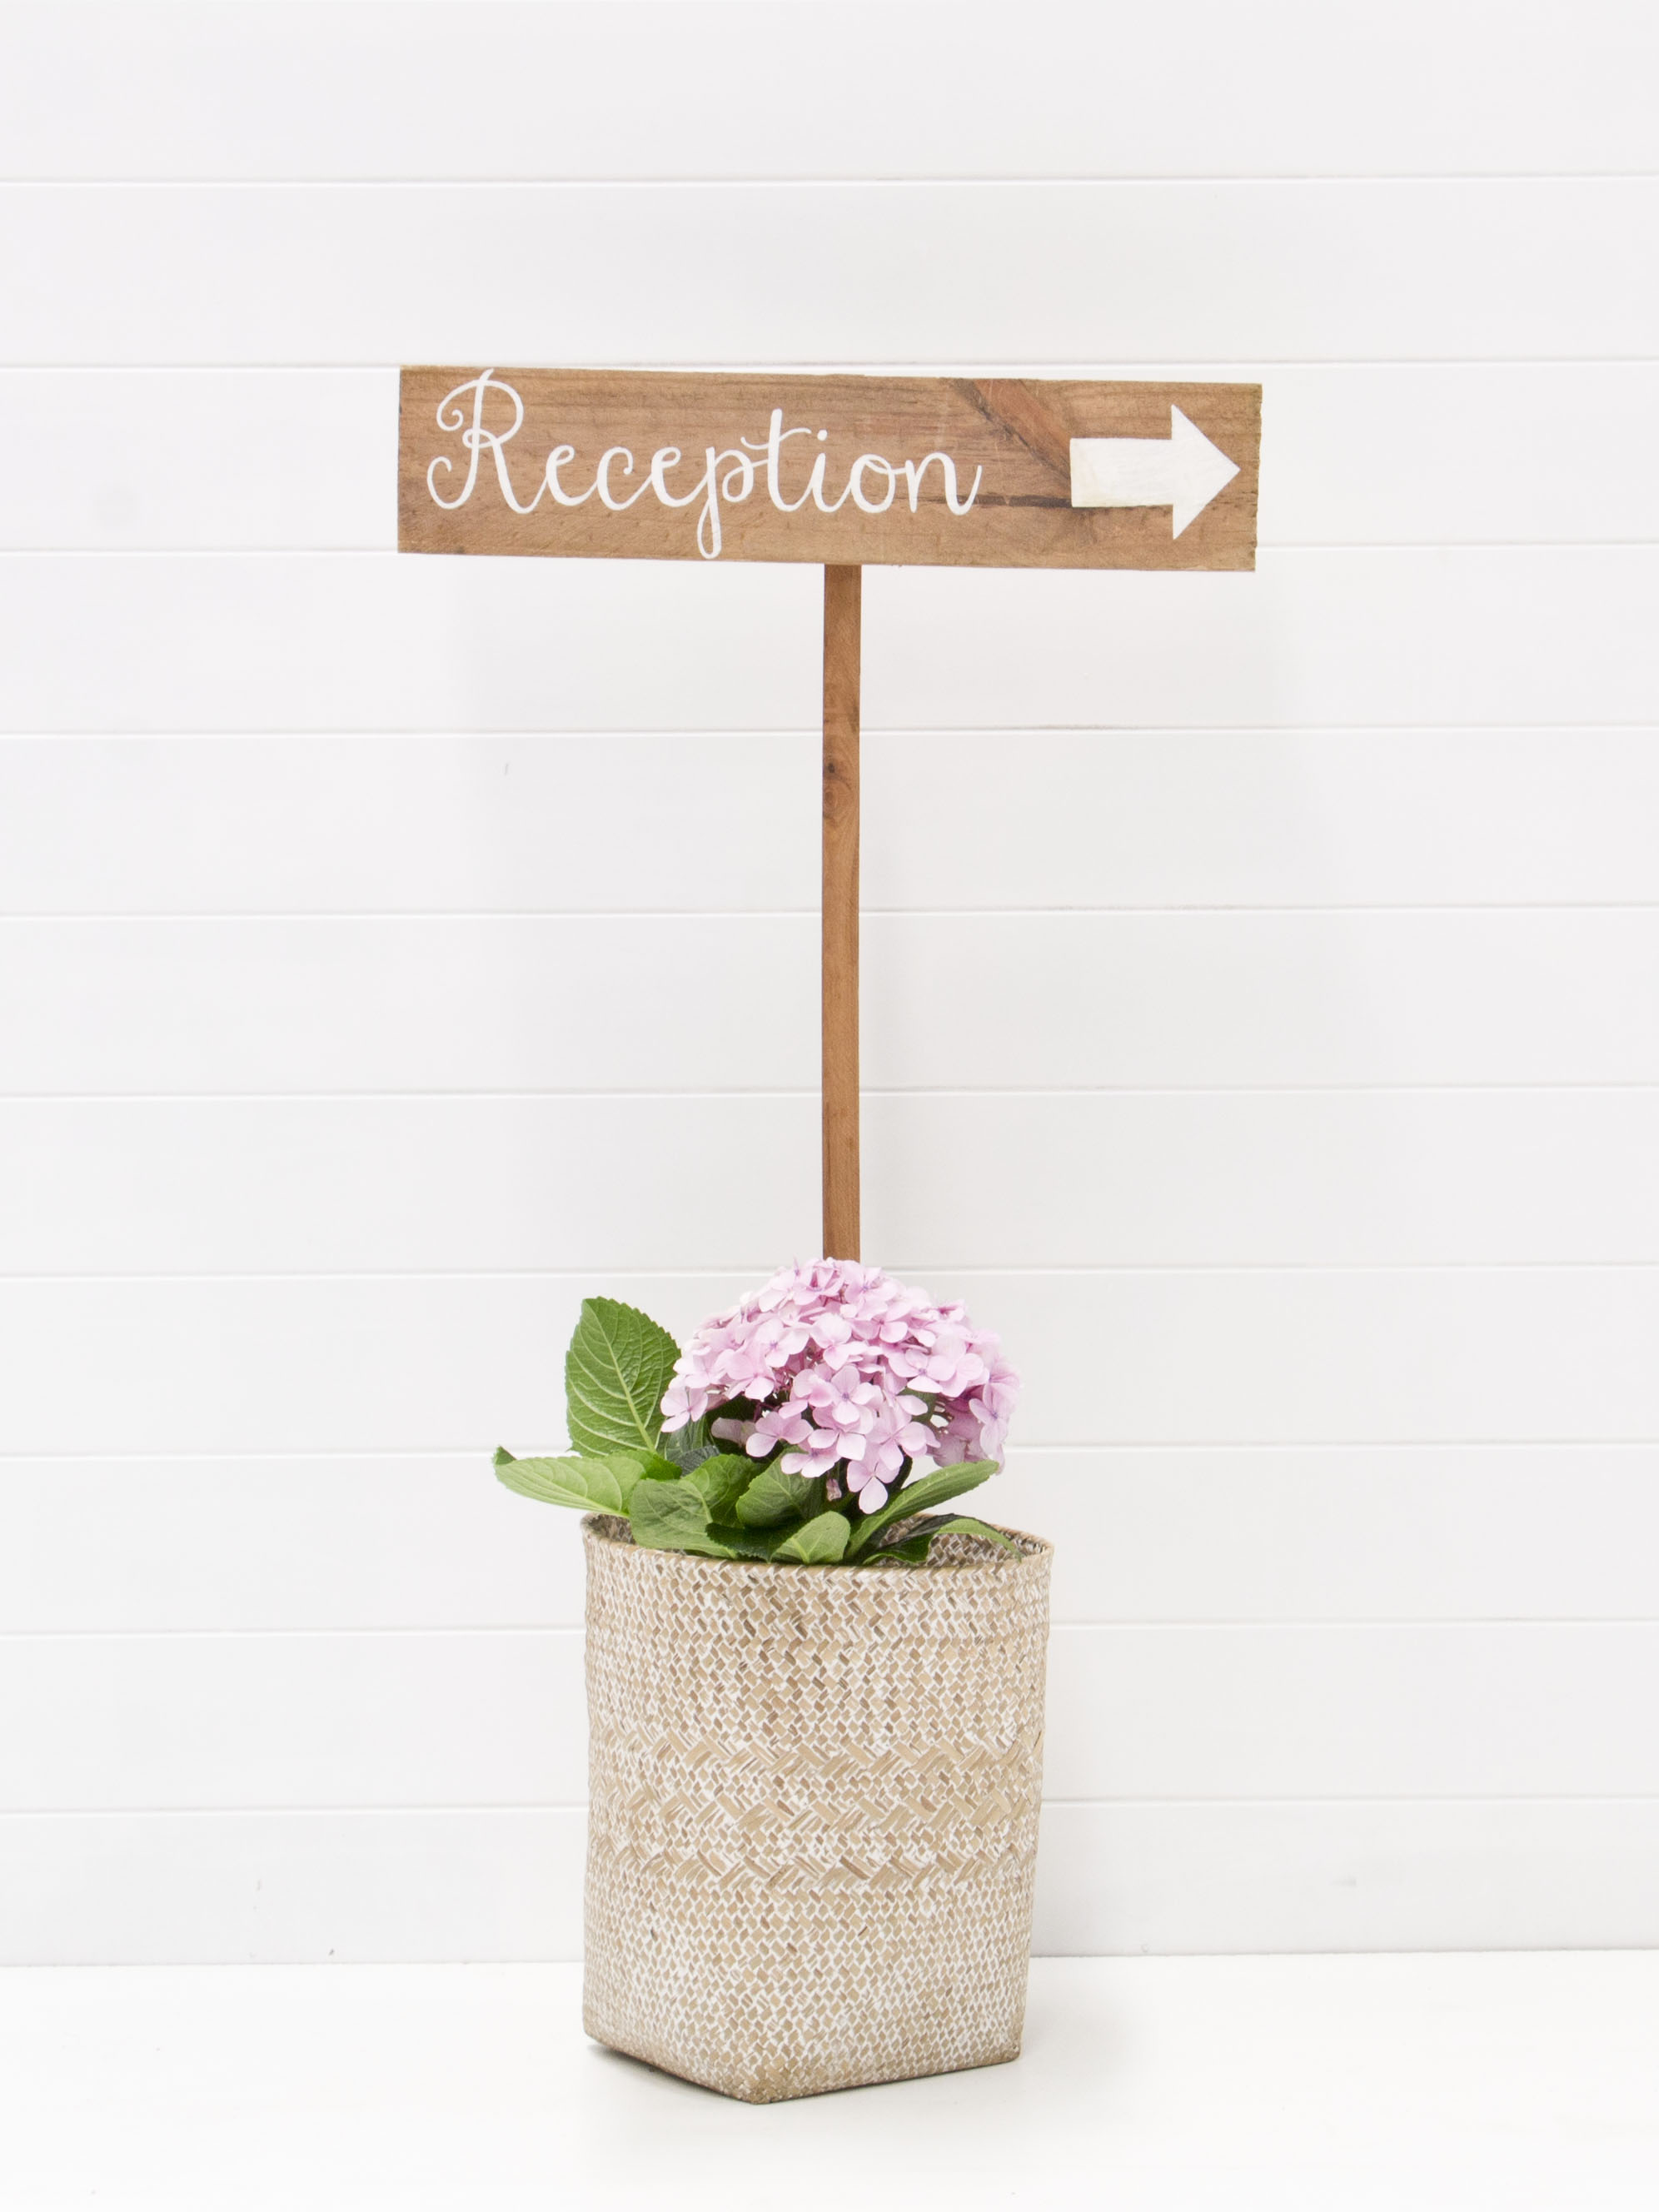 Reception wooden sign.jpg